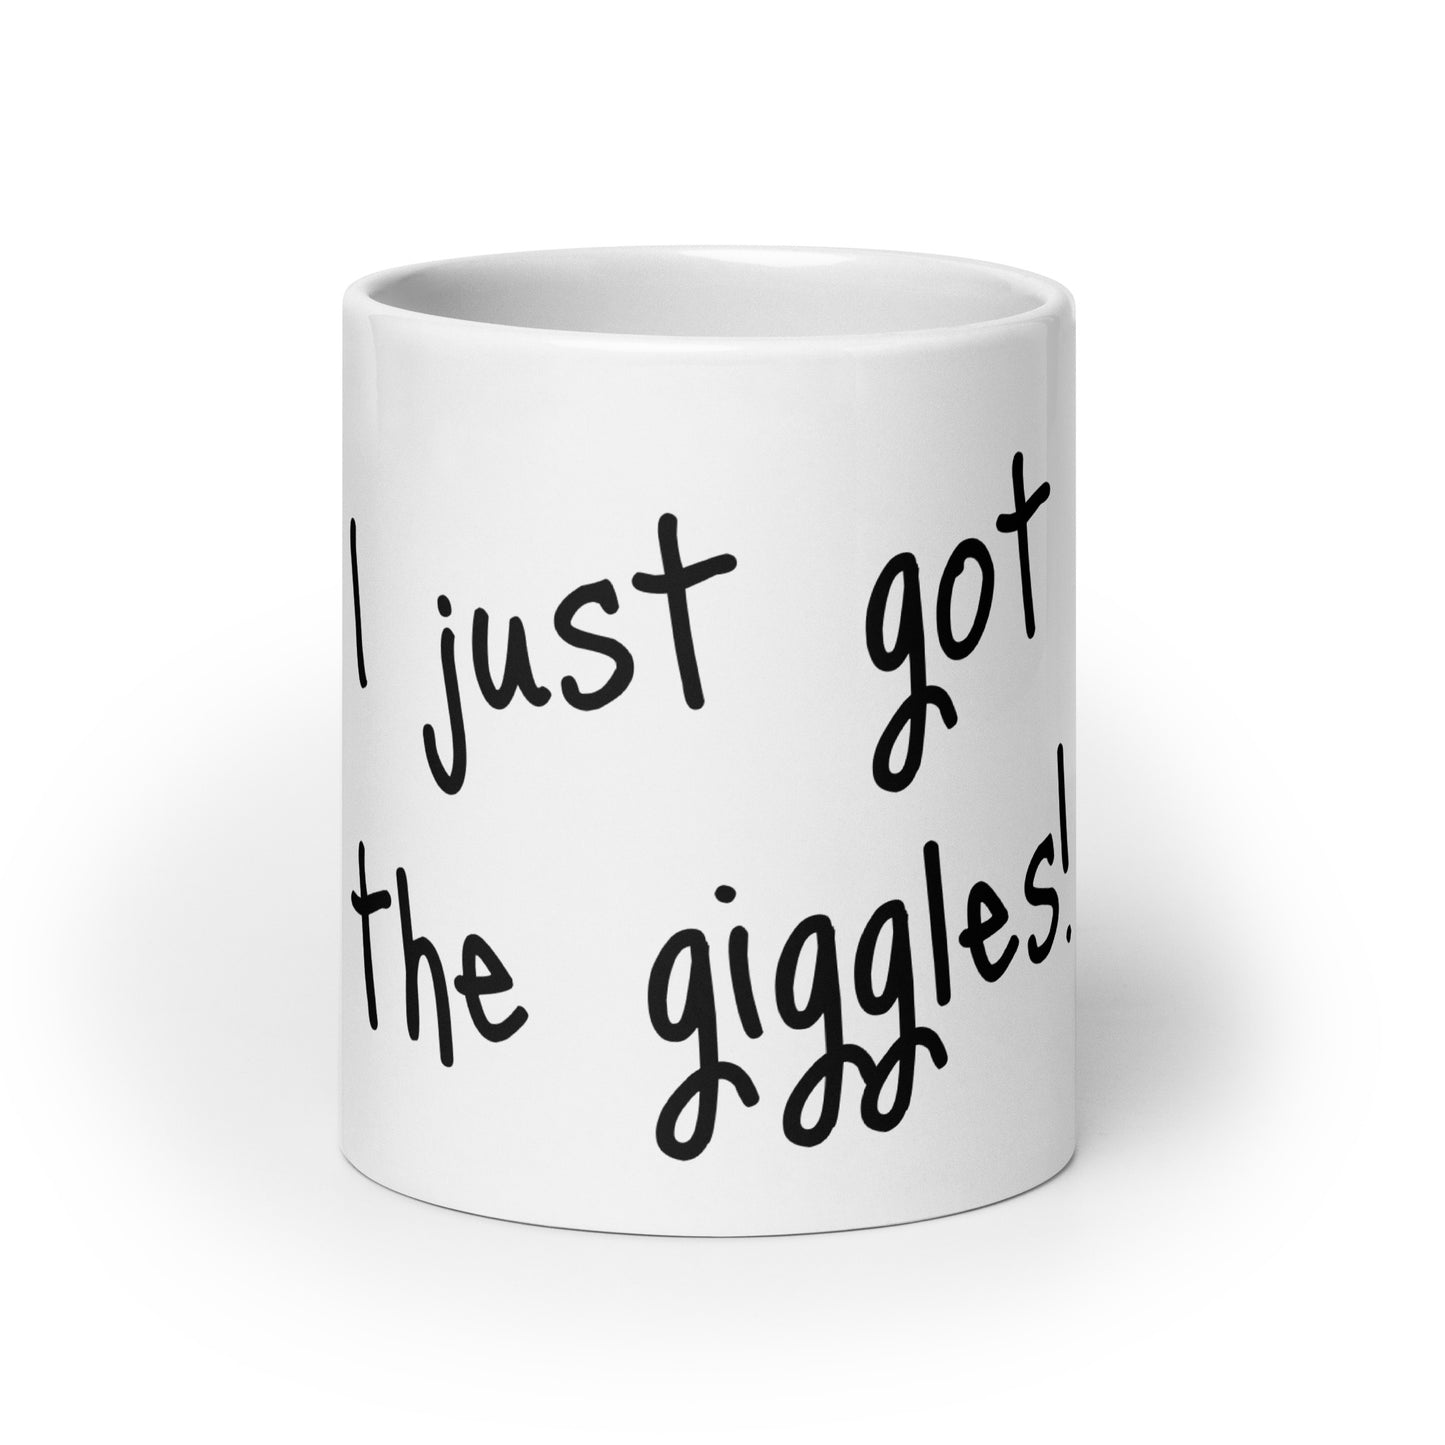 I just got the giggles - White glossy mug